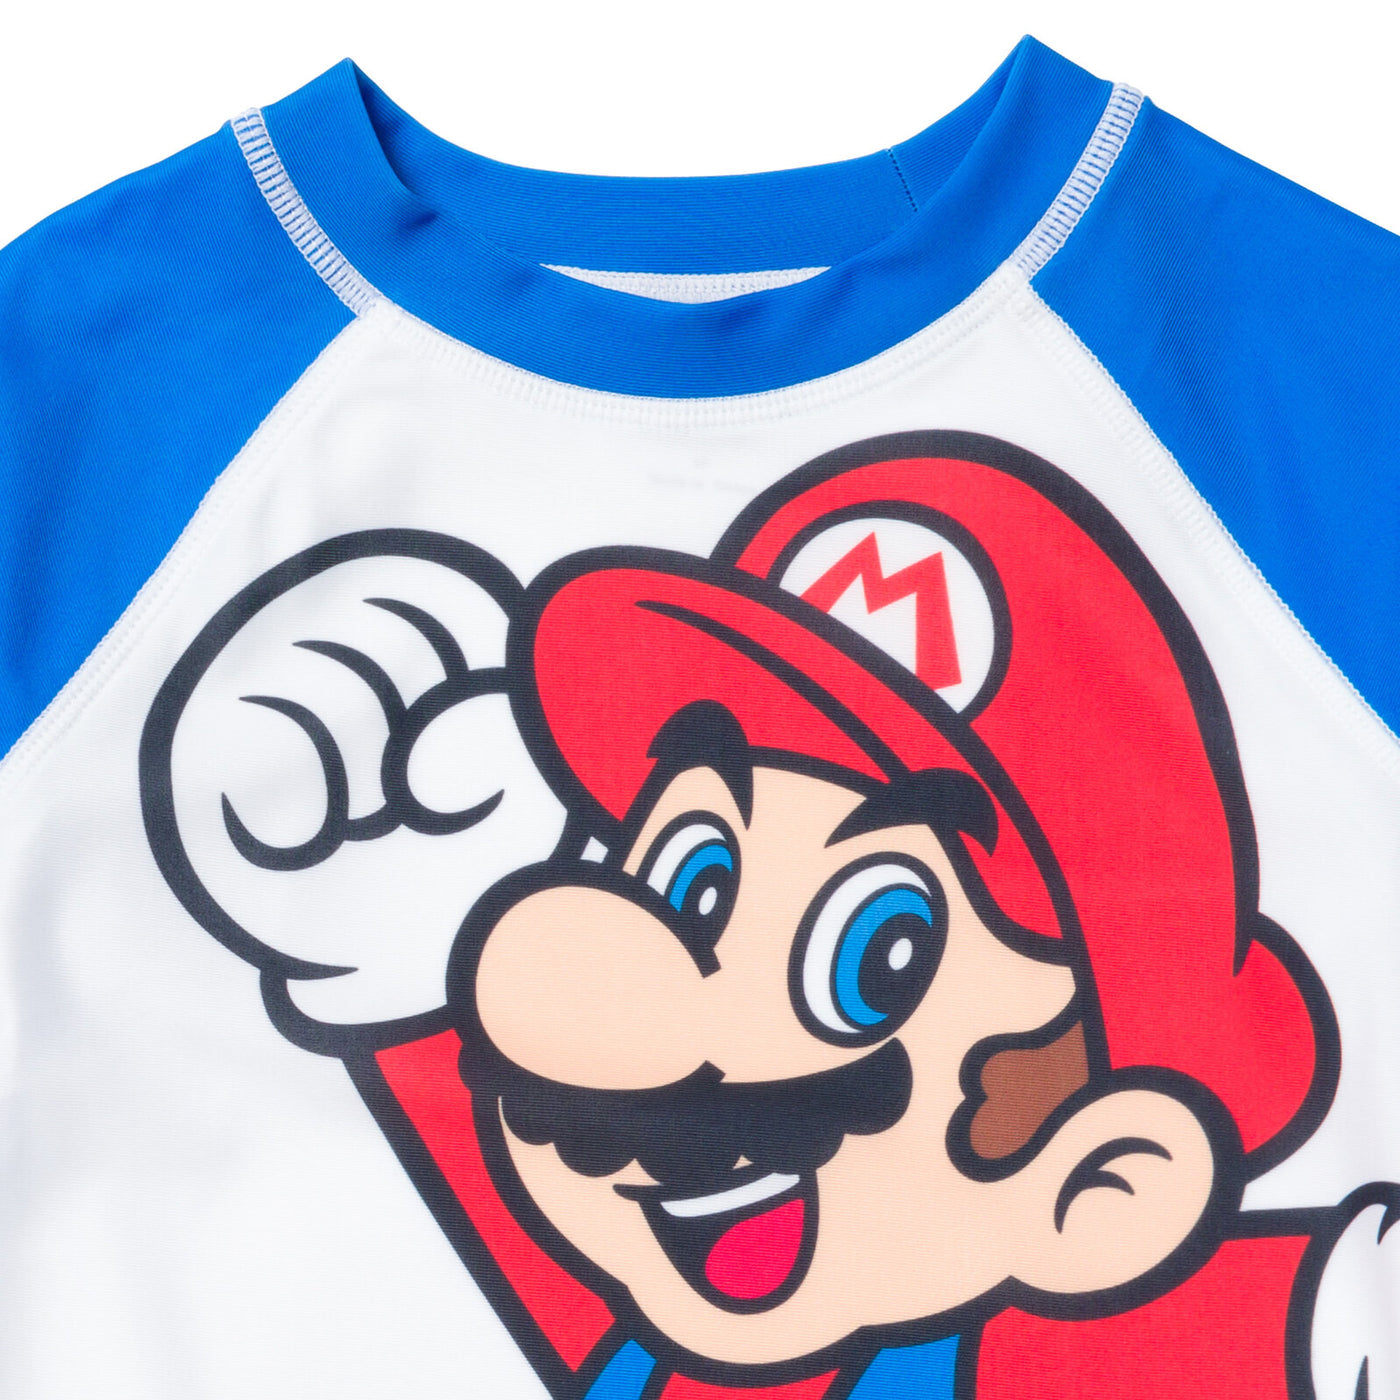 SUPER MARIO Nintendo Rash Guard Swim Shirt